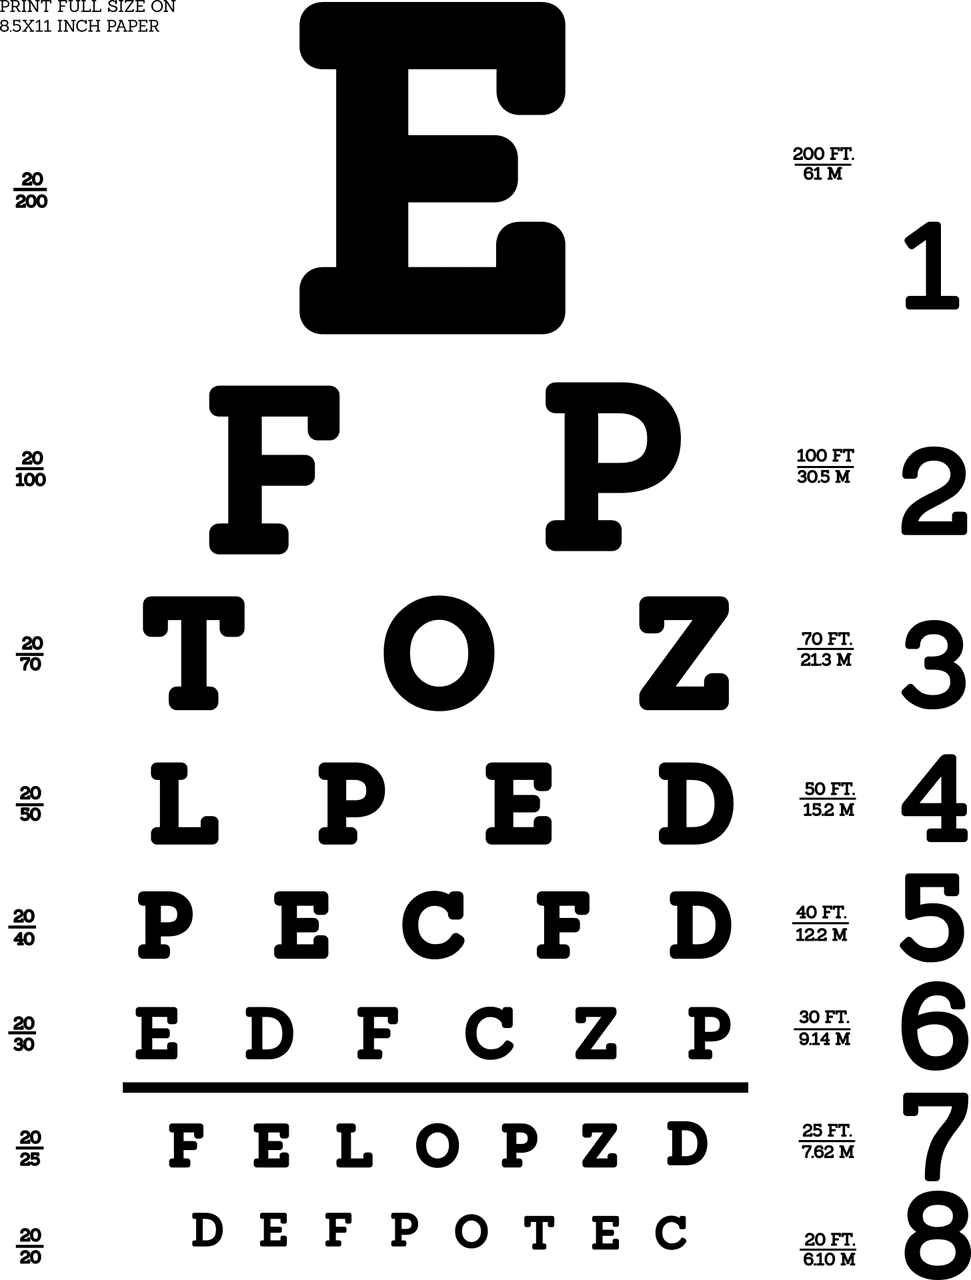 The Digital, Automated Eye Exam